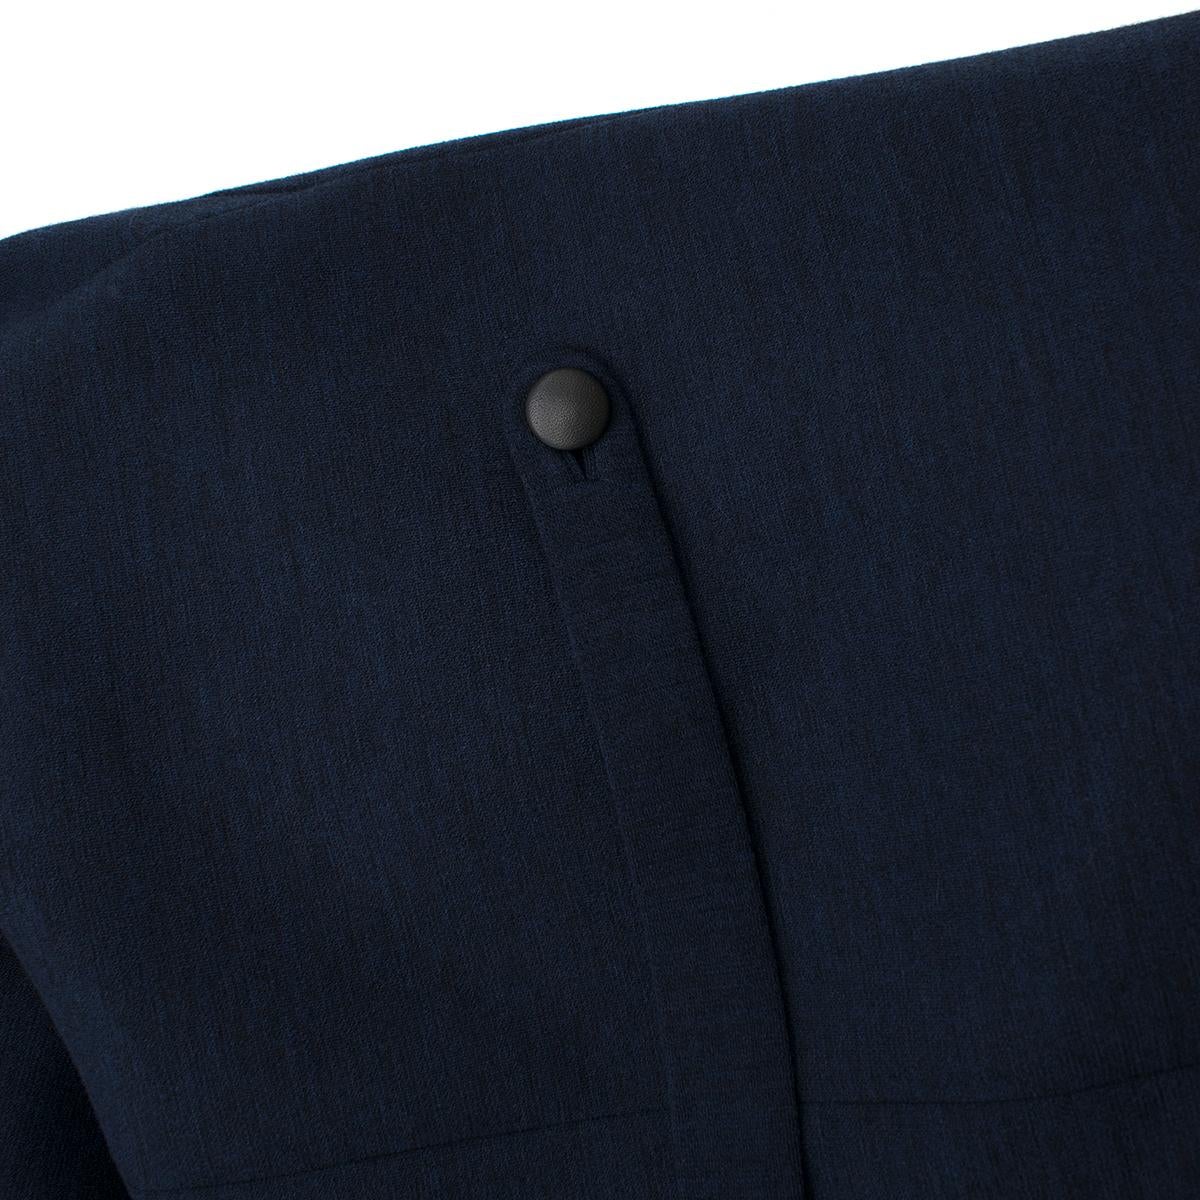 Balenciaga Navy Blue Wool Single-Breasted Coat 34 (FR) 4